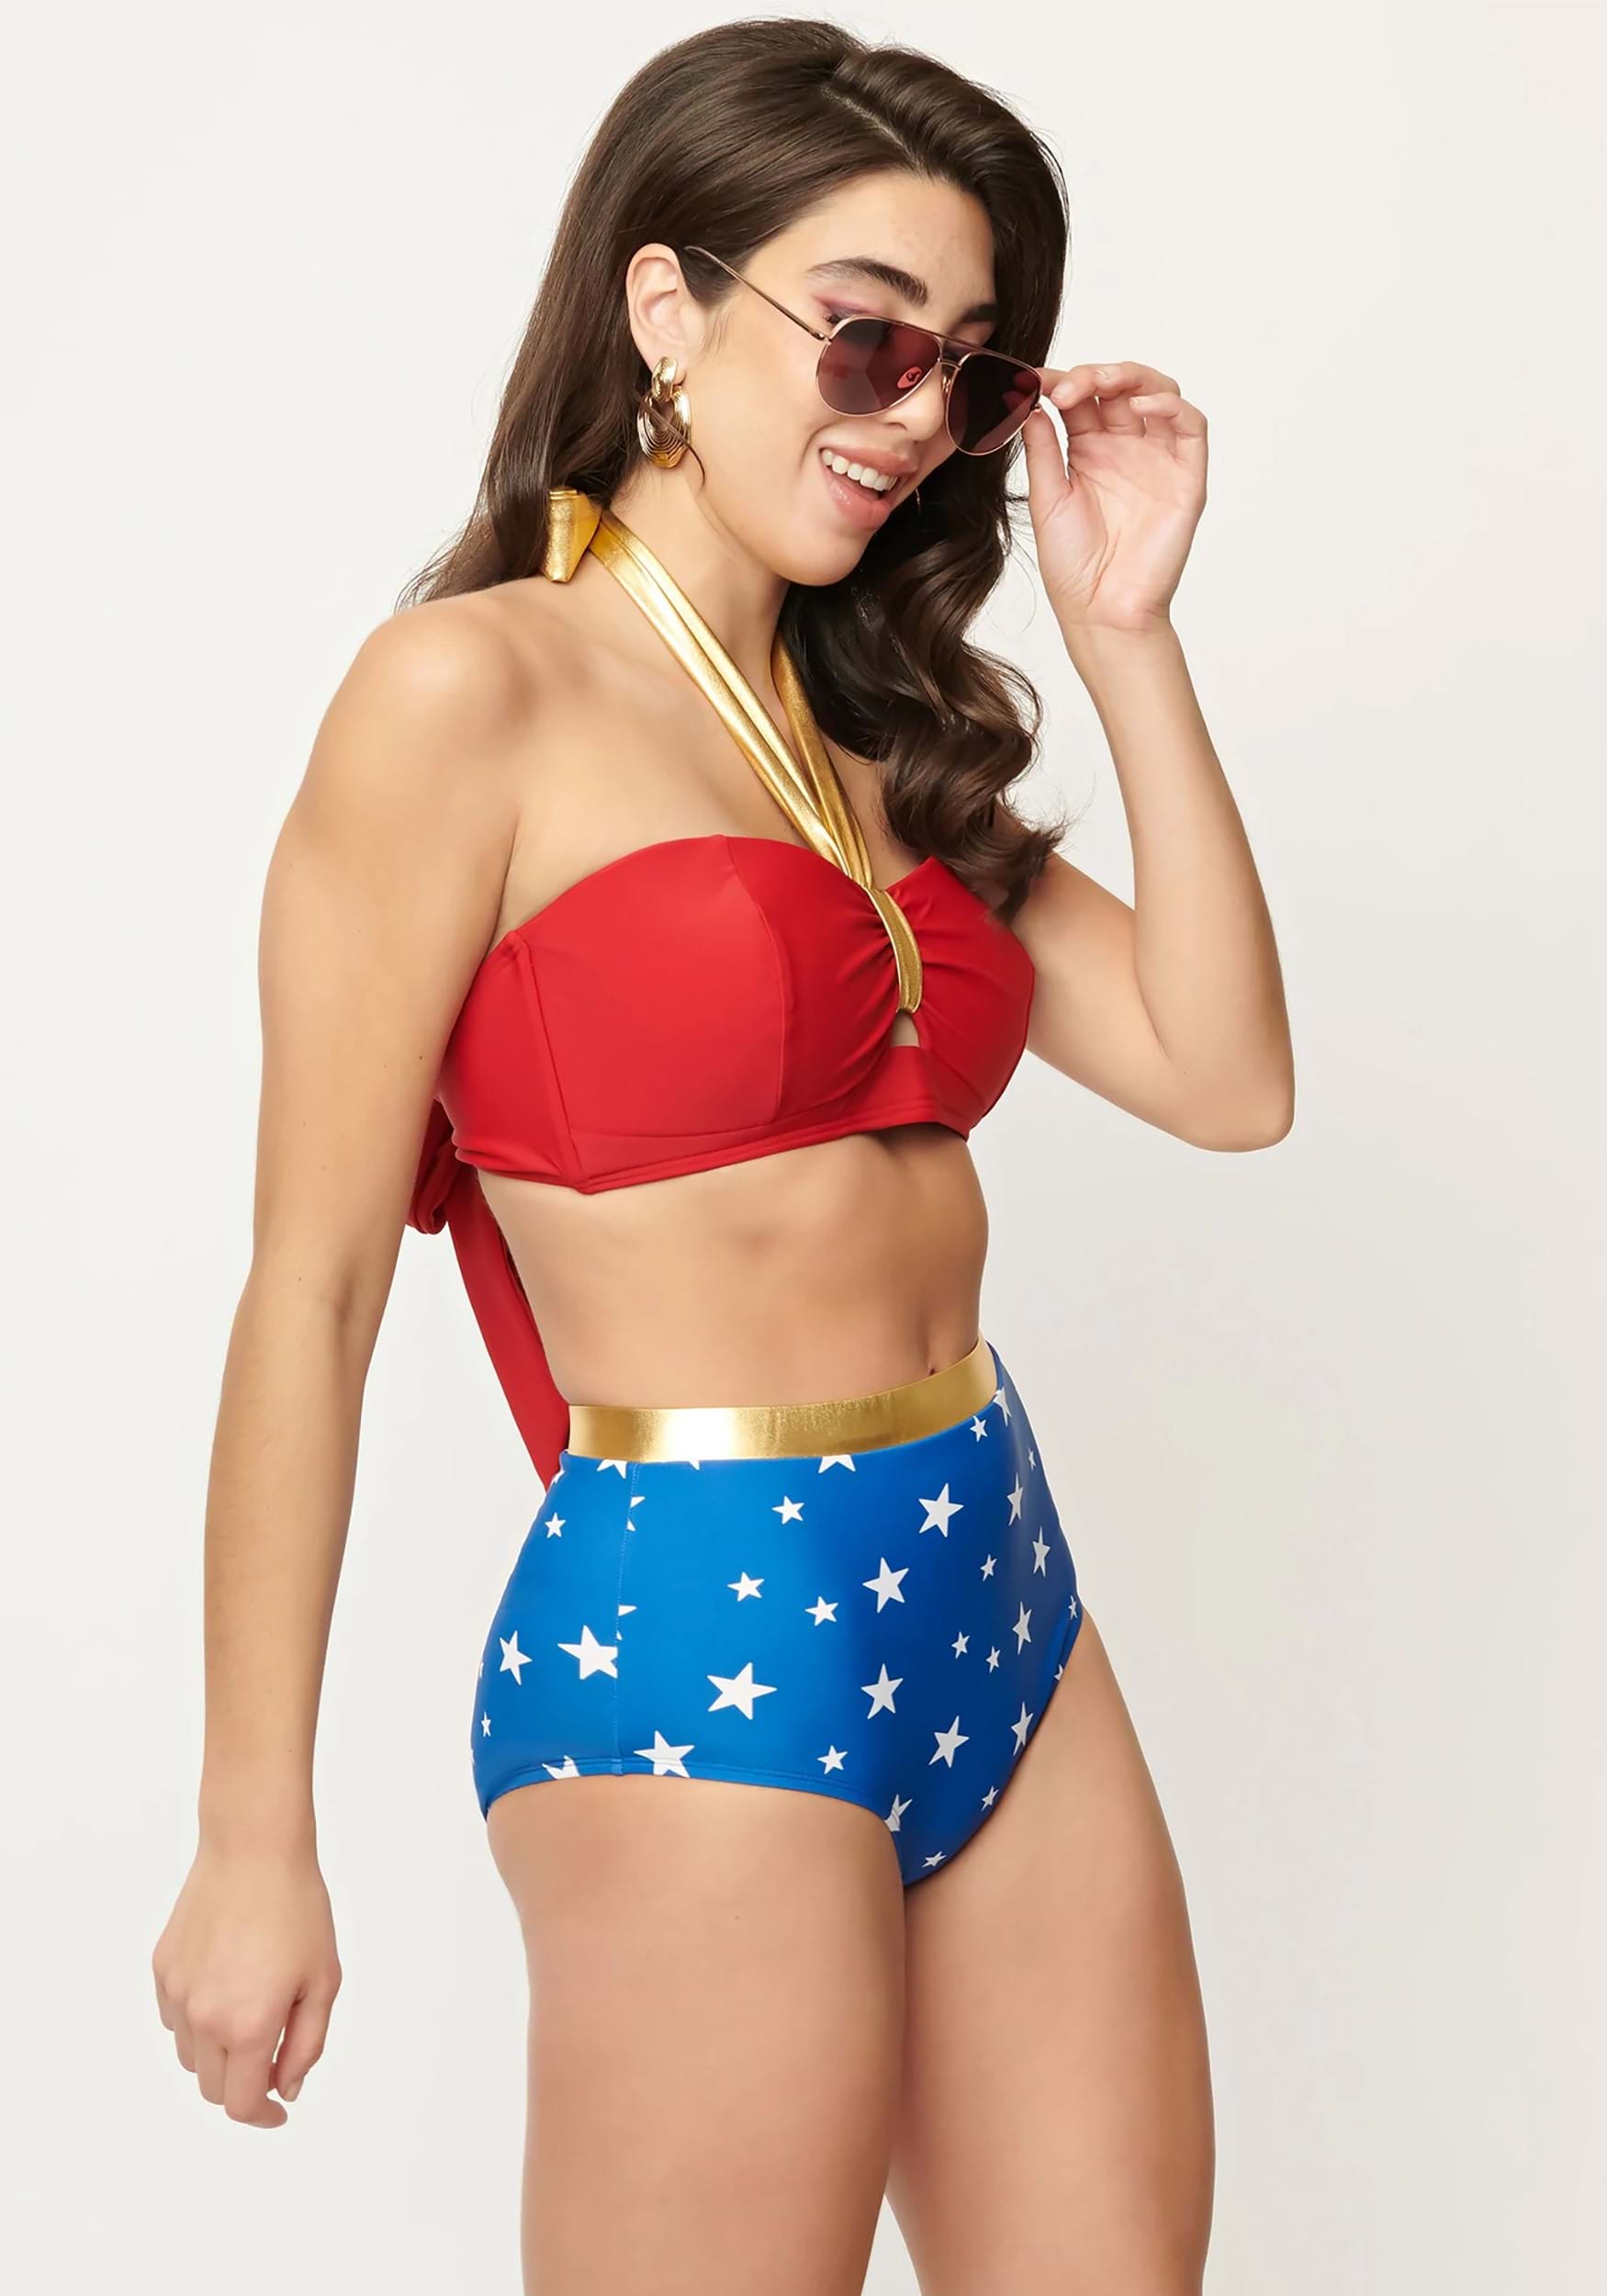 https://images.fun.com/products/85240/2-1-231474/wonder-woman-x-uv-halter-bikini-top-alt-3.jpg